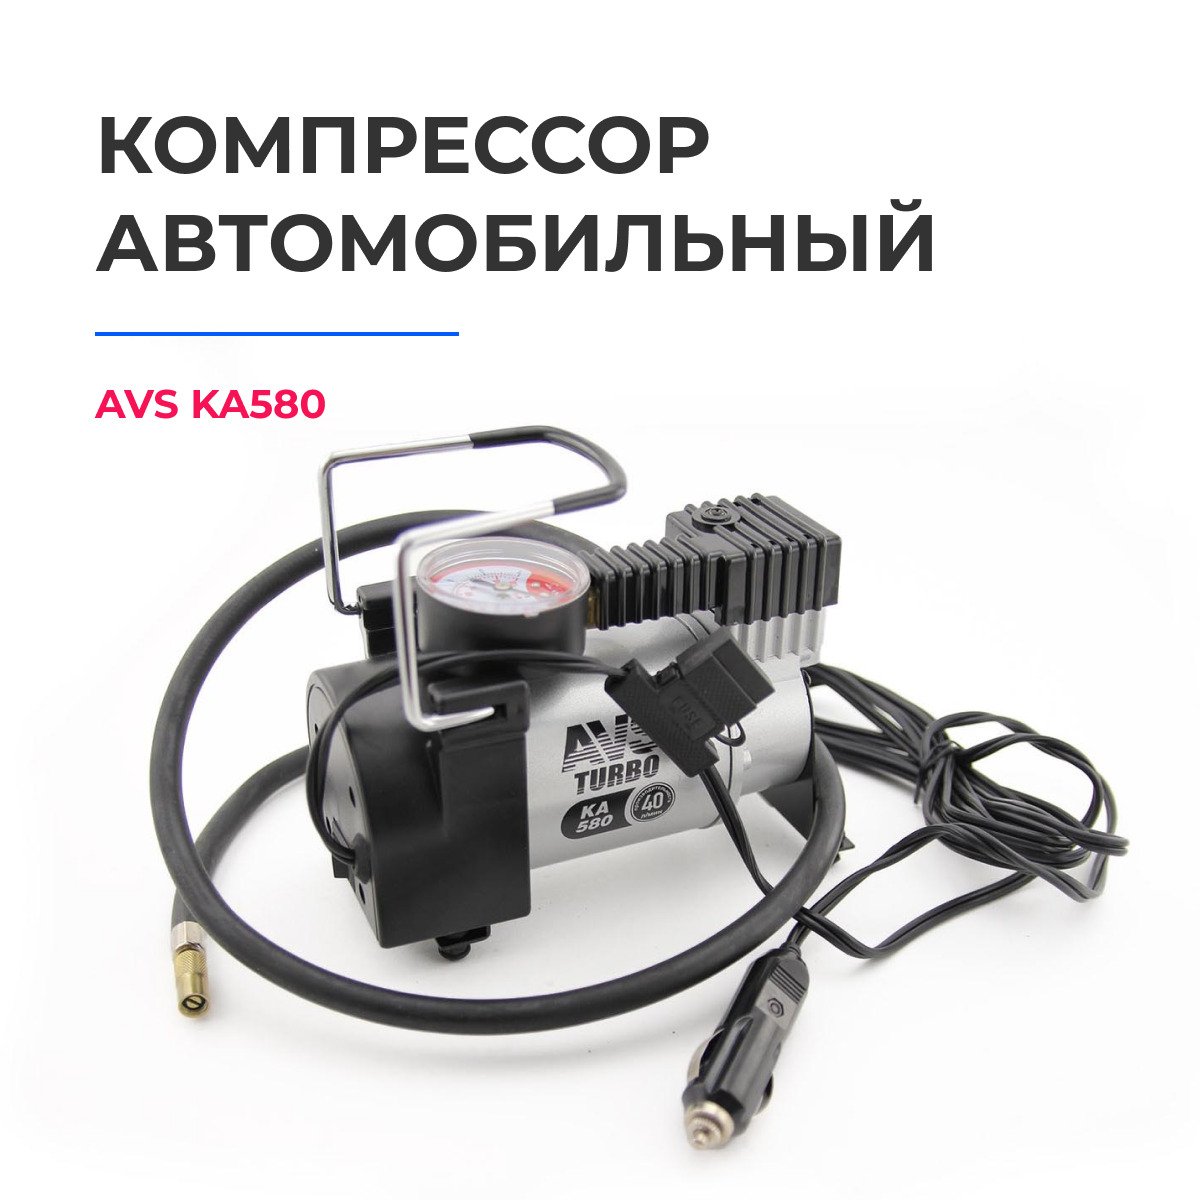 Компрессоры avs купить. Автомобильный компрессор AVS ka580. Компрессор AVS ka-580. Компрессор АВС турбо ка 580. Компрессор ka580 40л AVS Turbo.